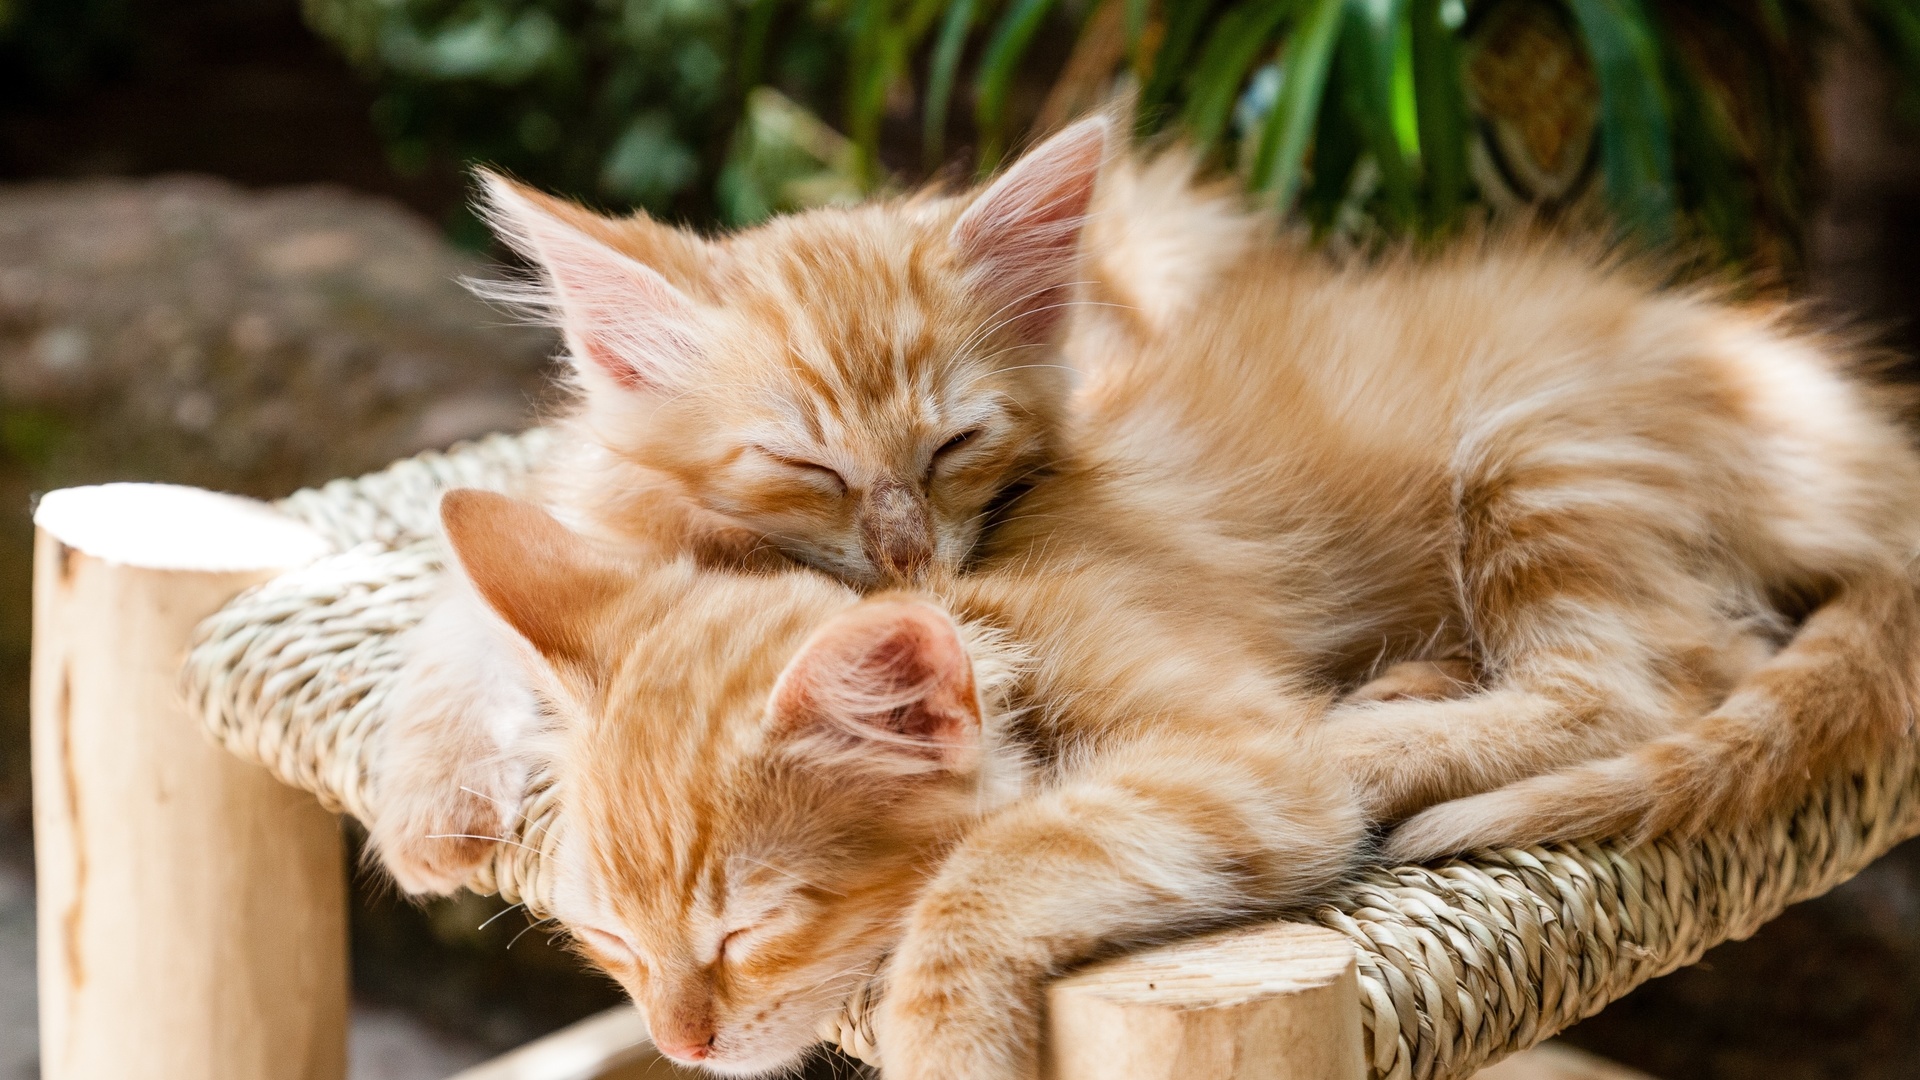 sleeping cats, kittens, pets, cute, animal